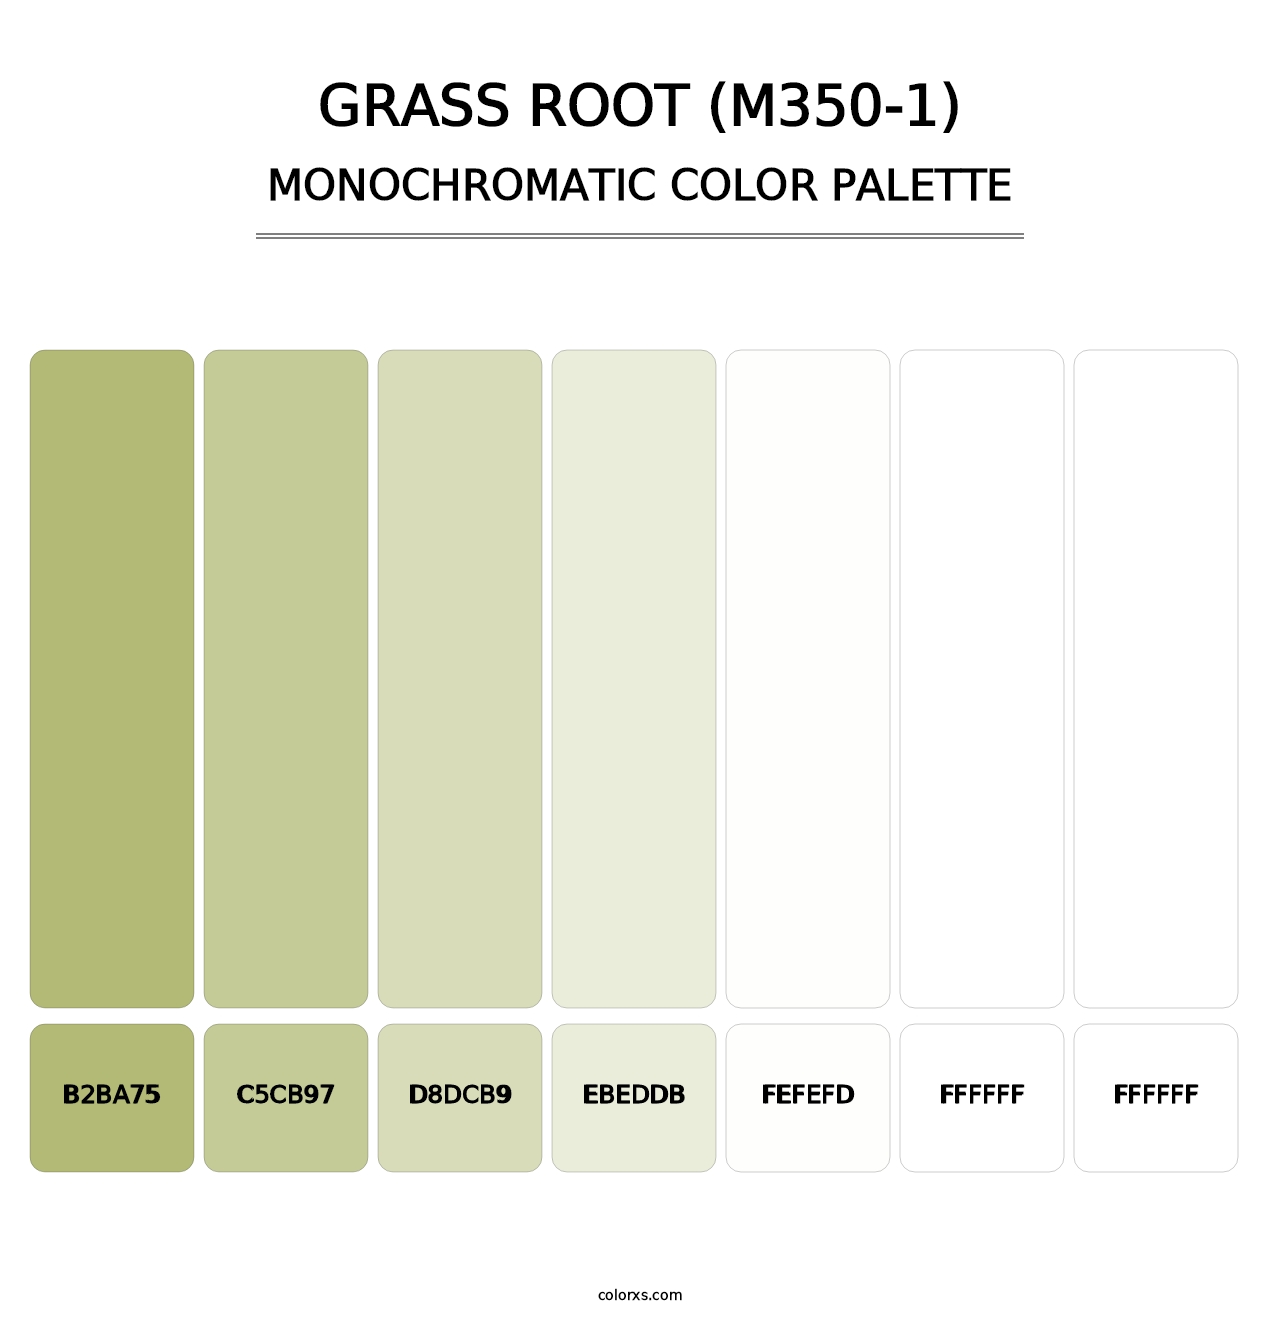 Grass Root (M350-1) - Monochromatic Color Palette